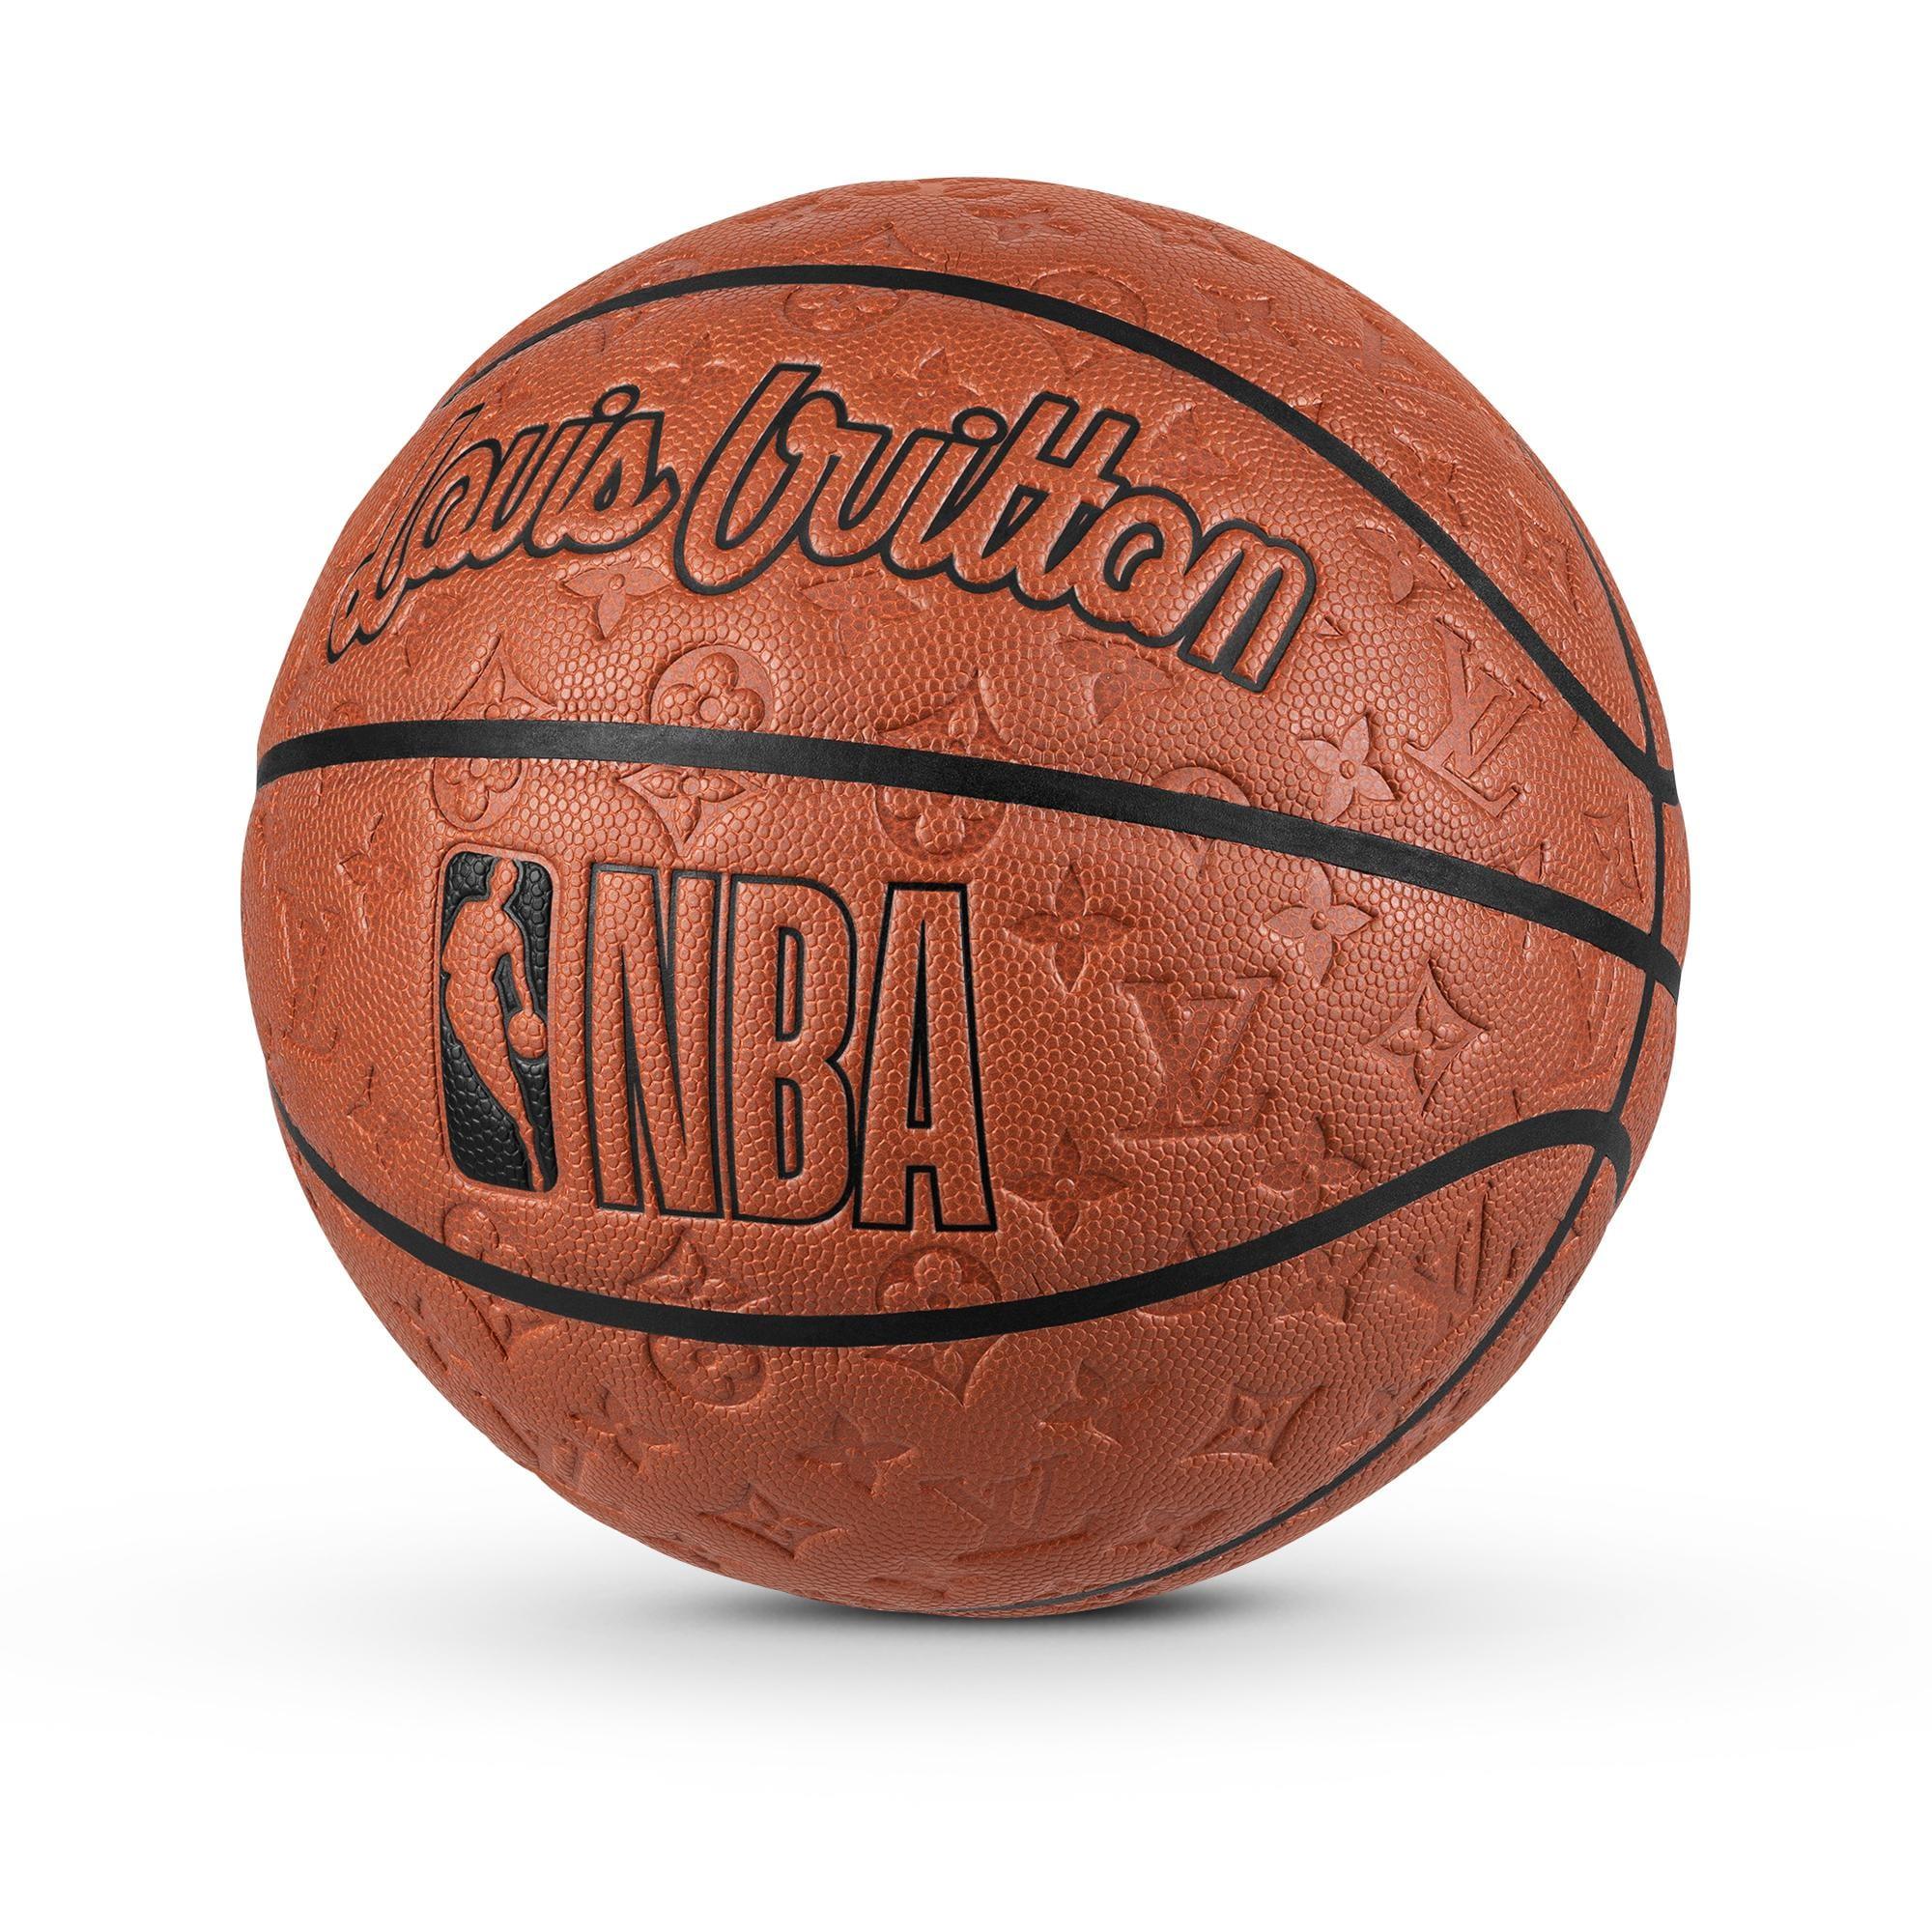 Louis Vuitton Runway NBA Basketball and Net Bag 562lvs614 at